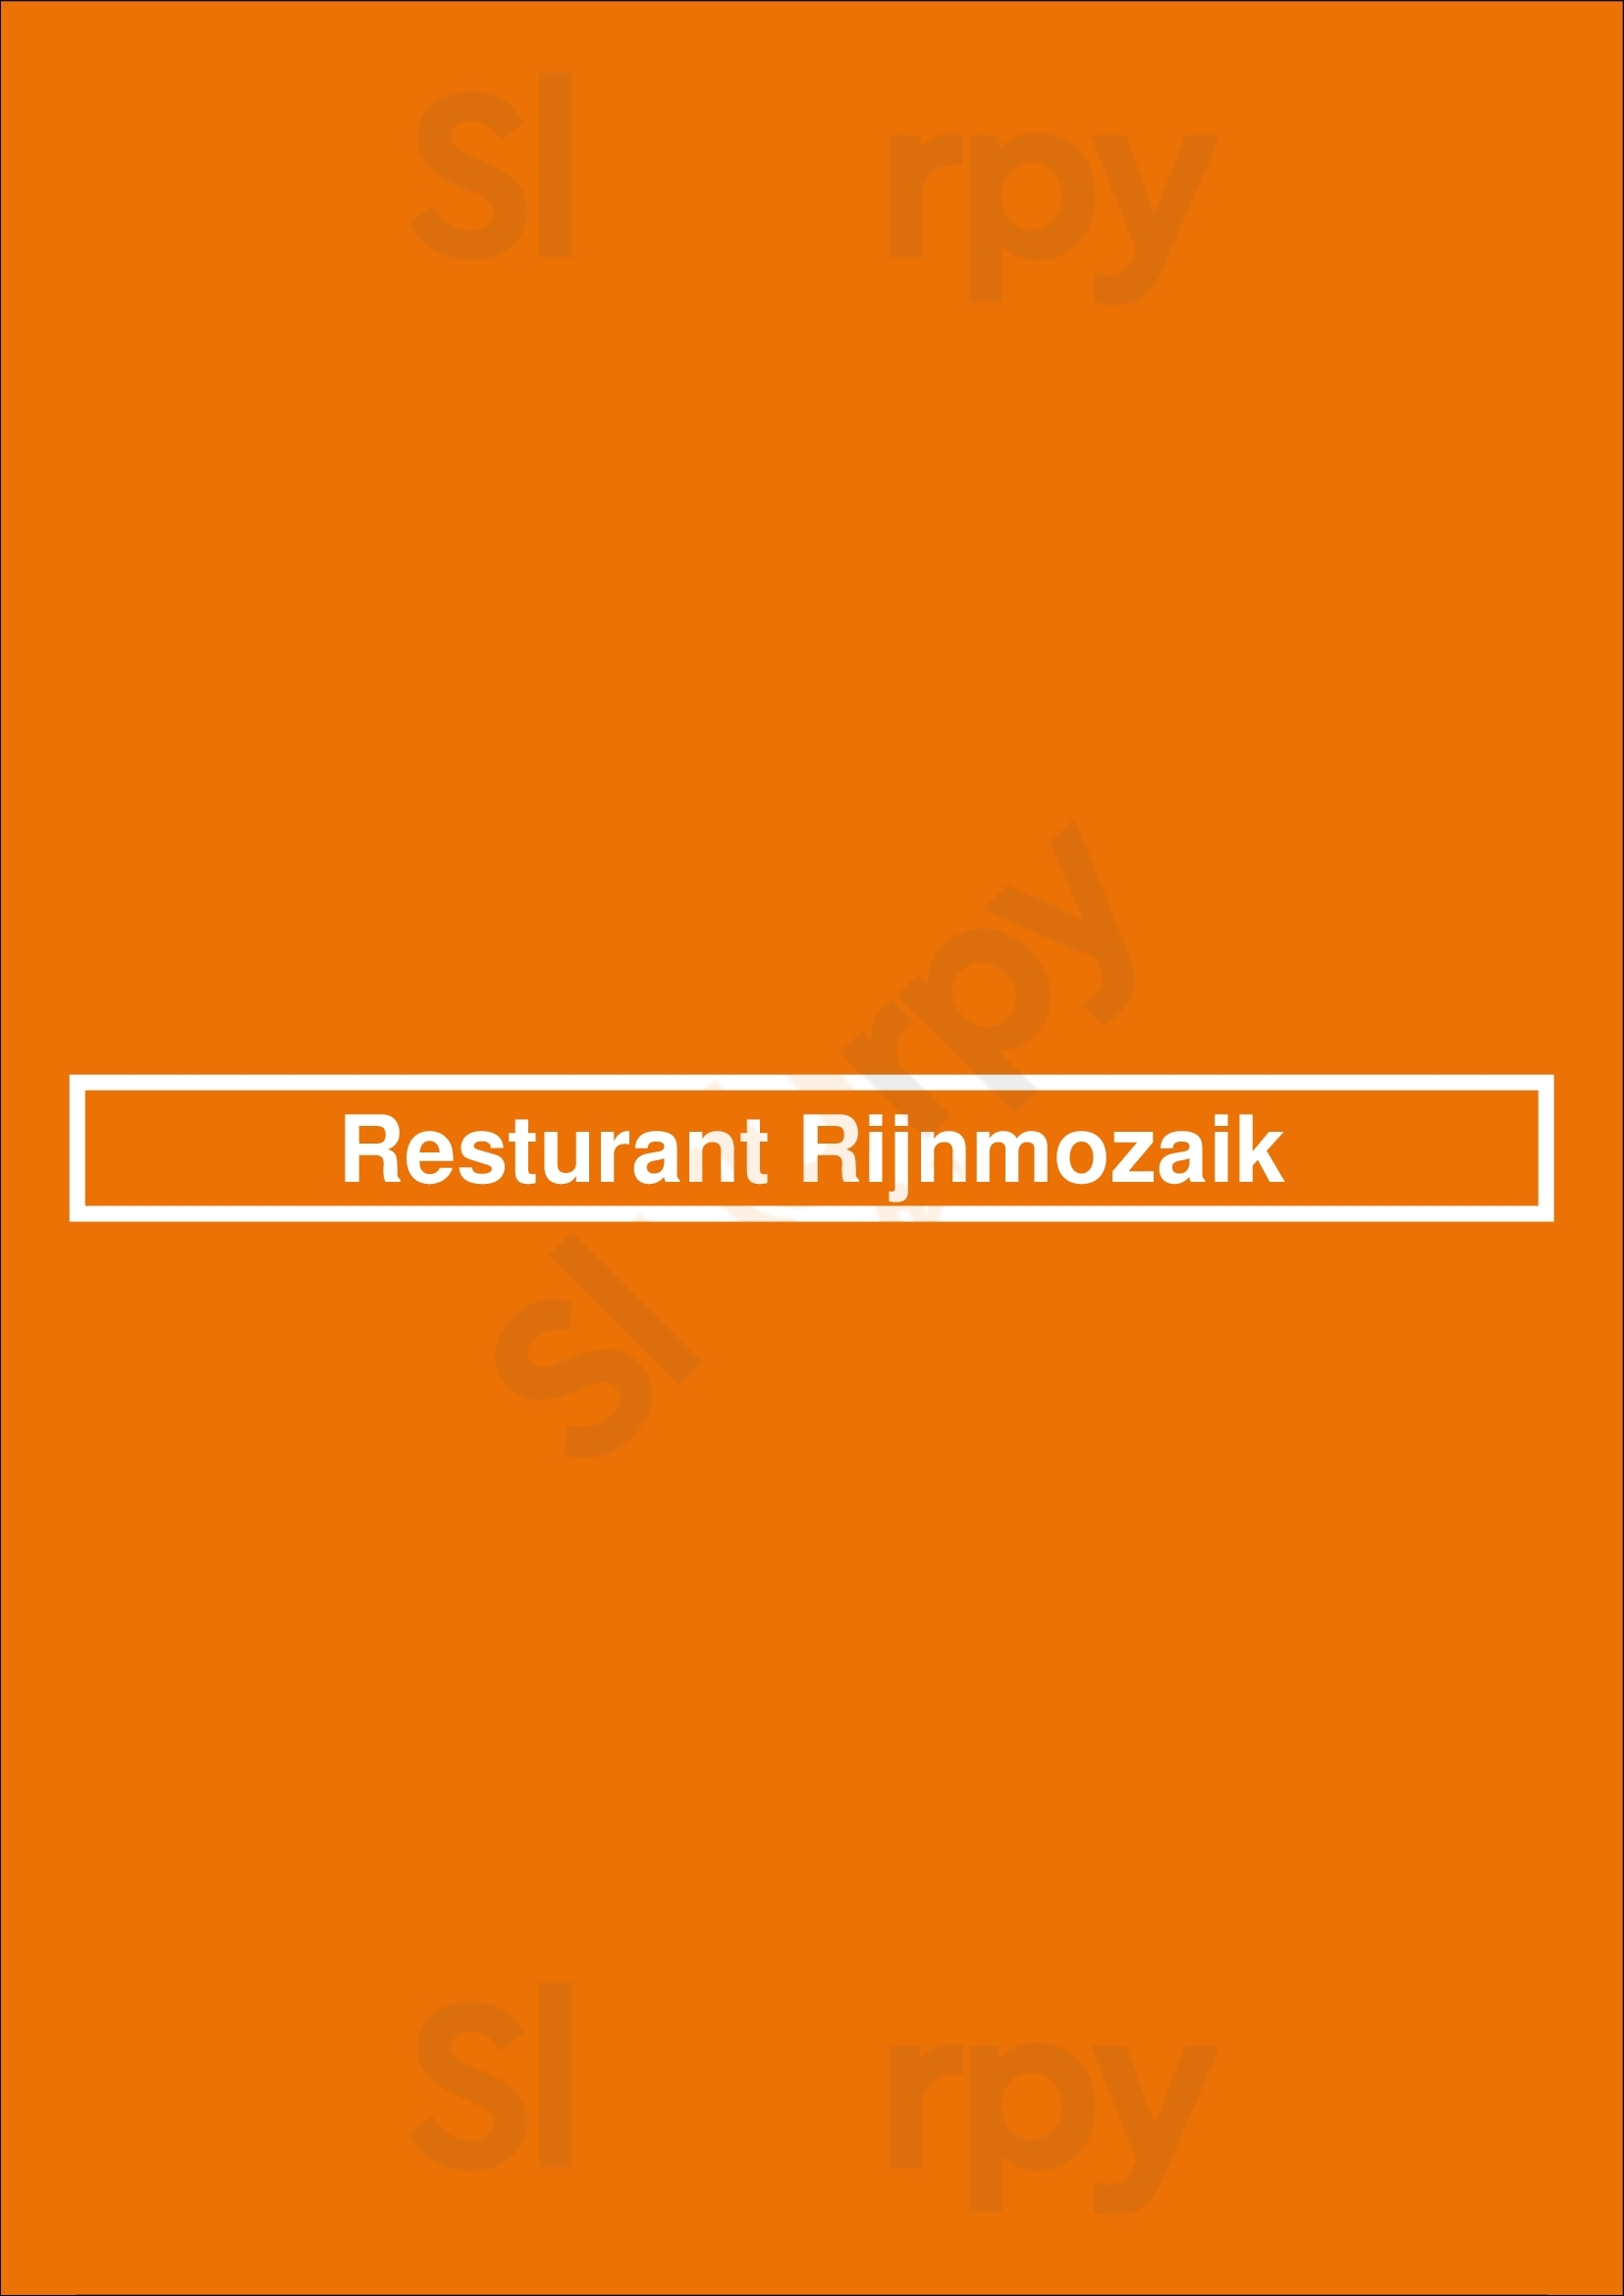 Resturant Rijnmozaik Arnhem Menu - 1